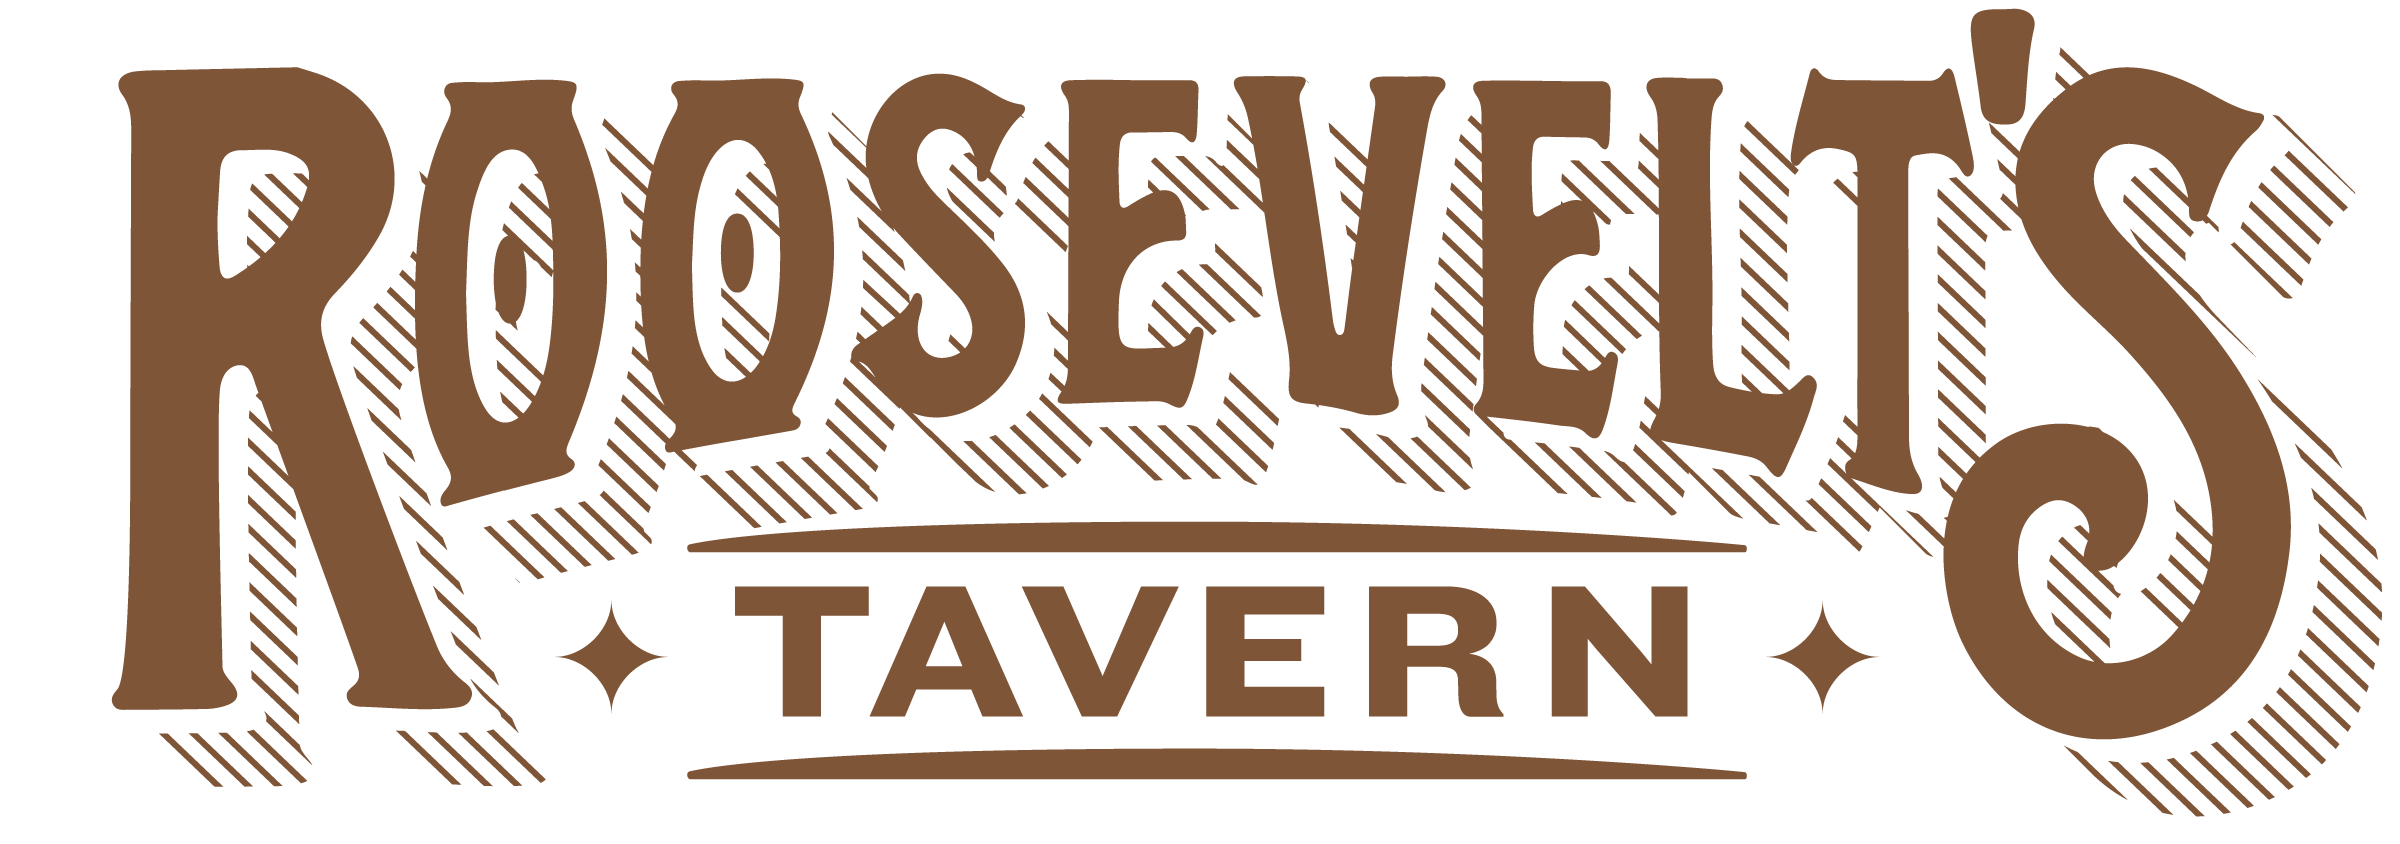 Roosevelt's Tavern